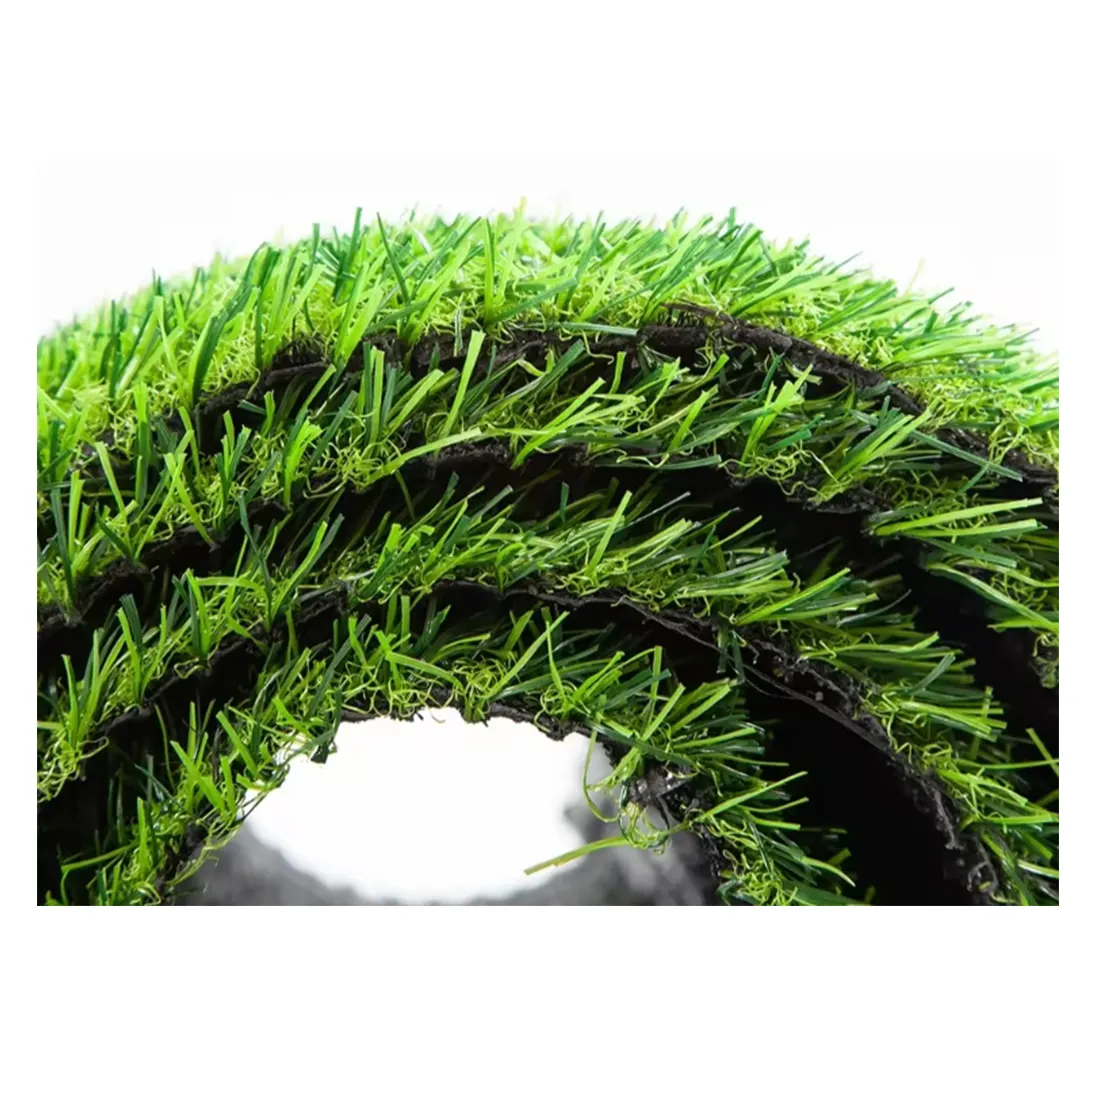 Terrain de football artificiel de tapis d'herbe de jardin professionnel avec le certificat de la CE